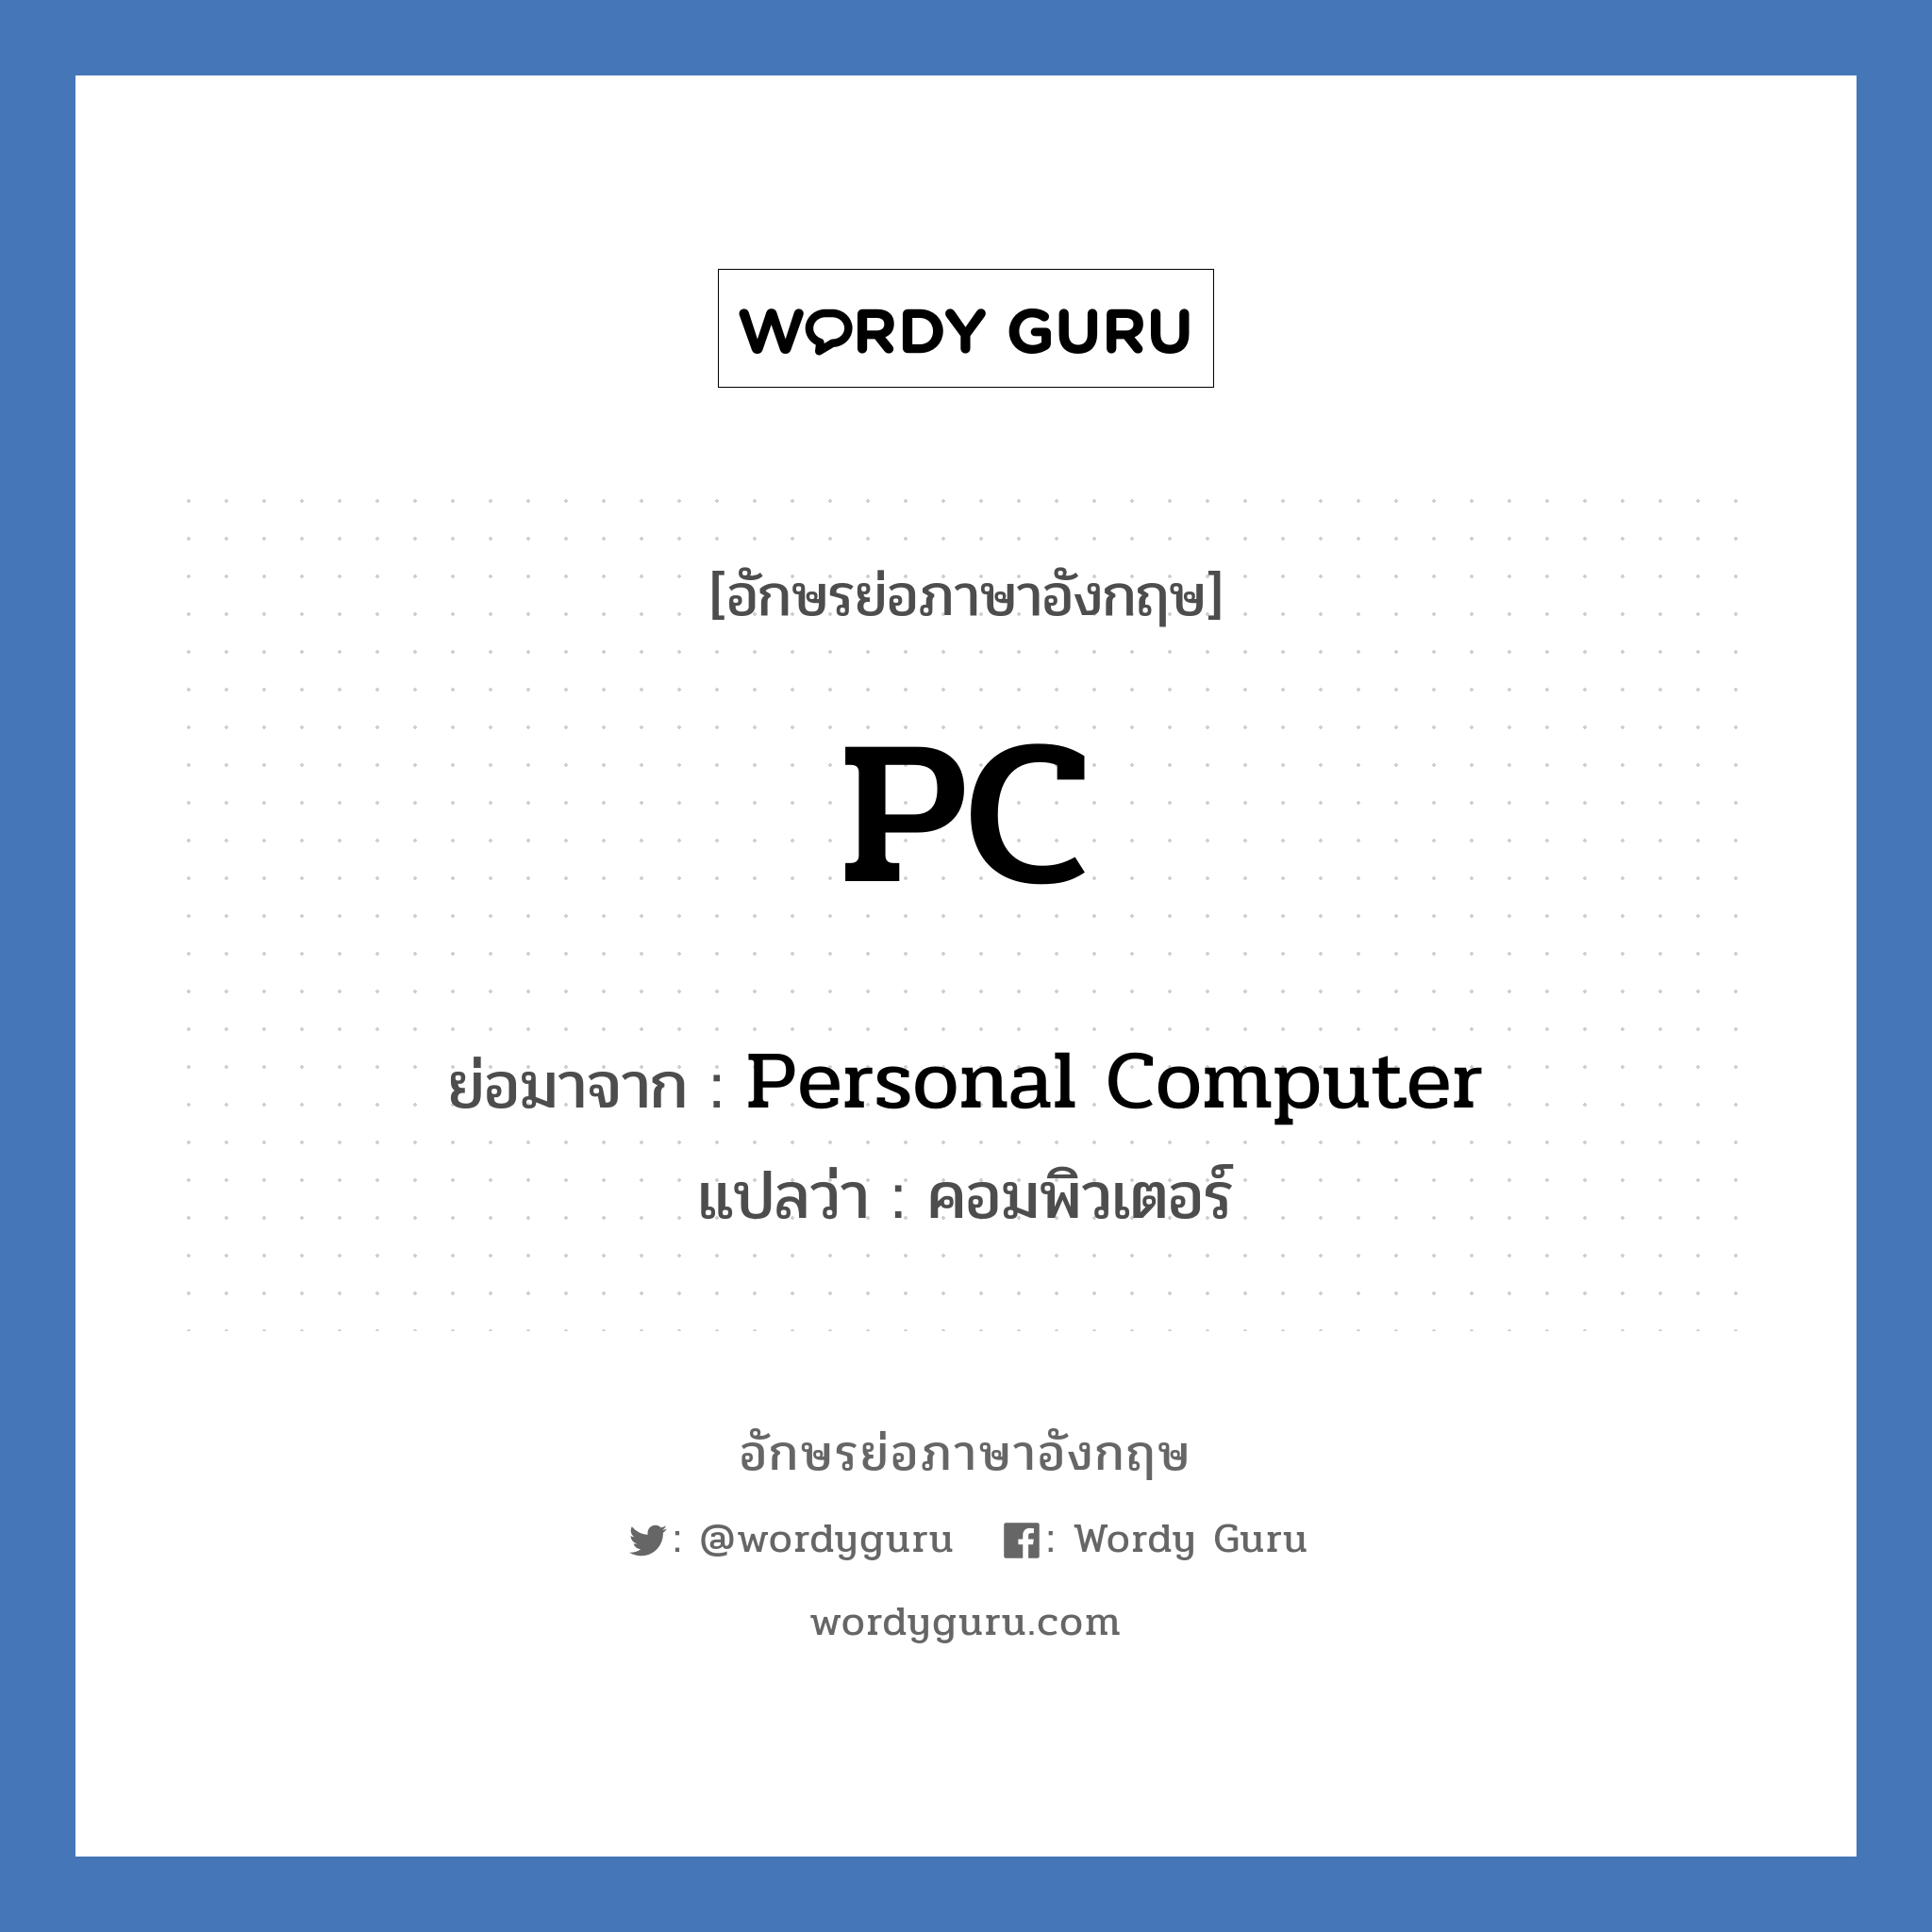 Personal Computer คำย่อคือ? แปลว่า?, อักษรย่อภาษาอังกฤษ Personal Computer ย่อมาจาก PC แปลว่า คอมพิวเตอร์